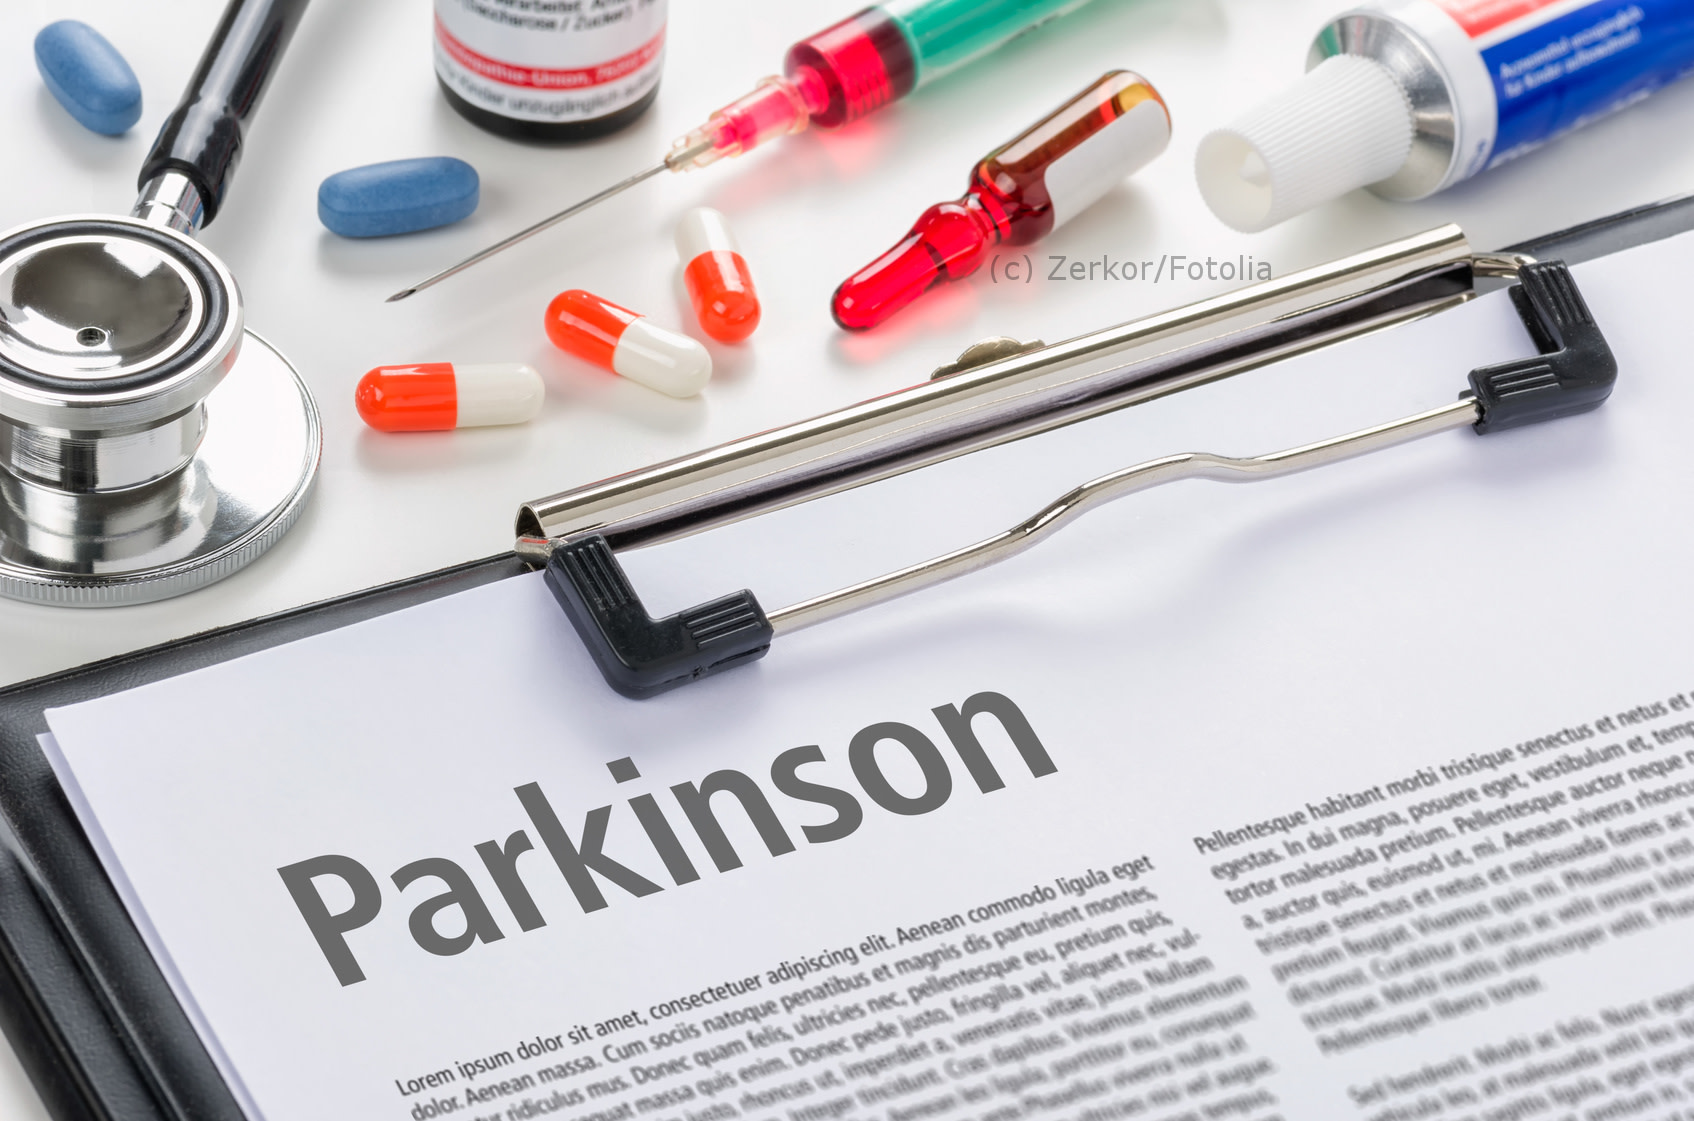 Parkinson  c zerbor1 fotoliapsgids